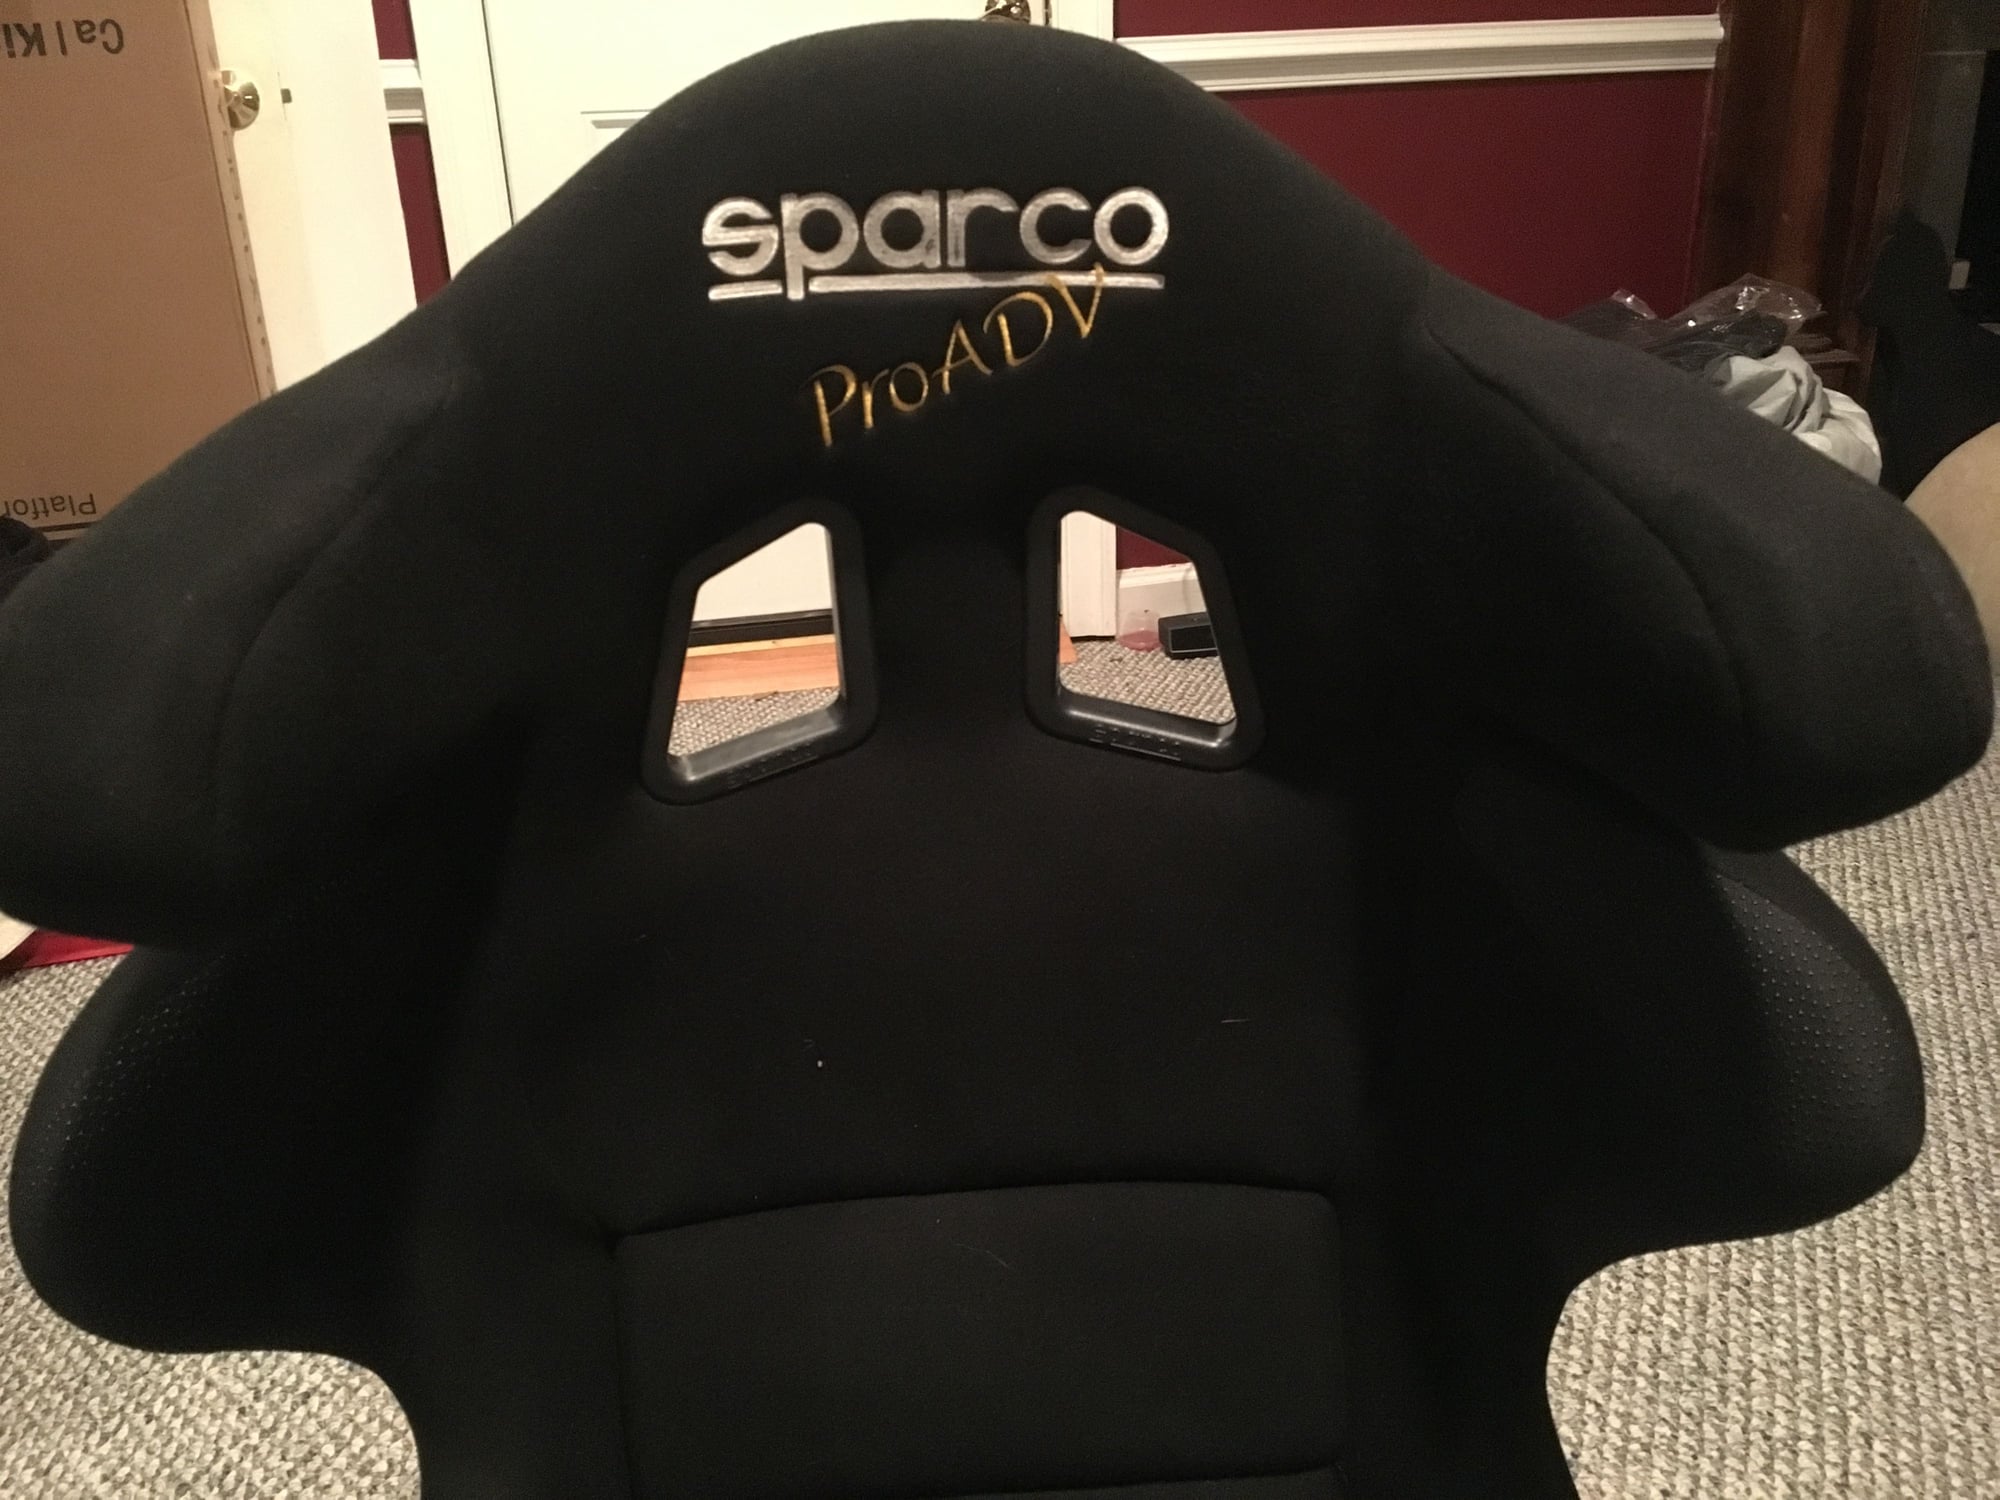 Interior/Upholstery - Sparco Pro ADV fiberglass race seat - Used - Reston, VA 20190, United States